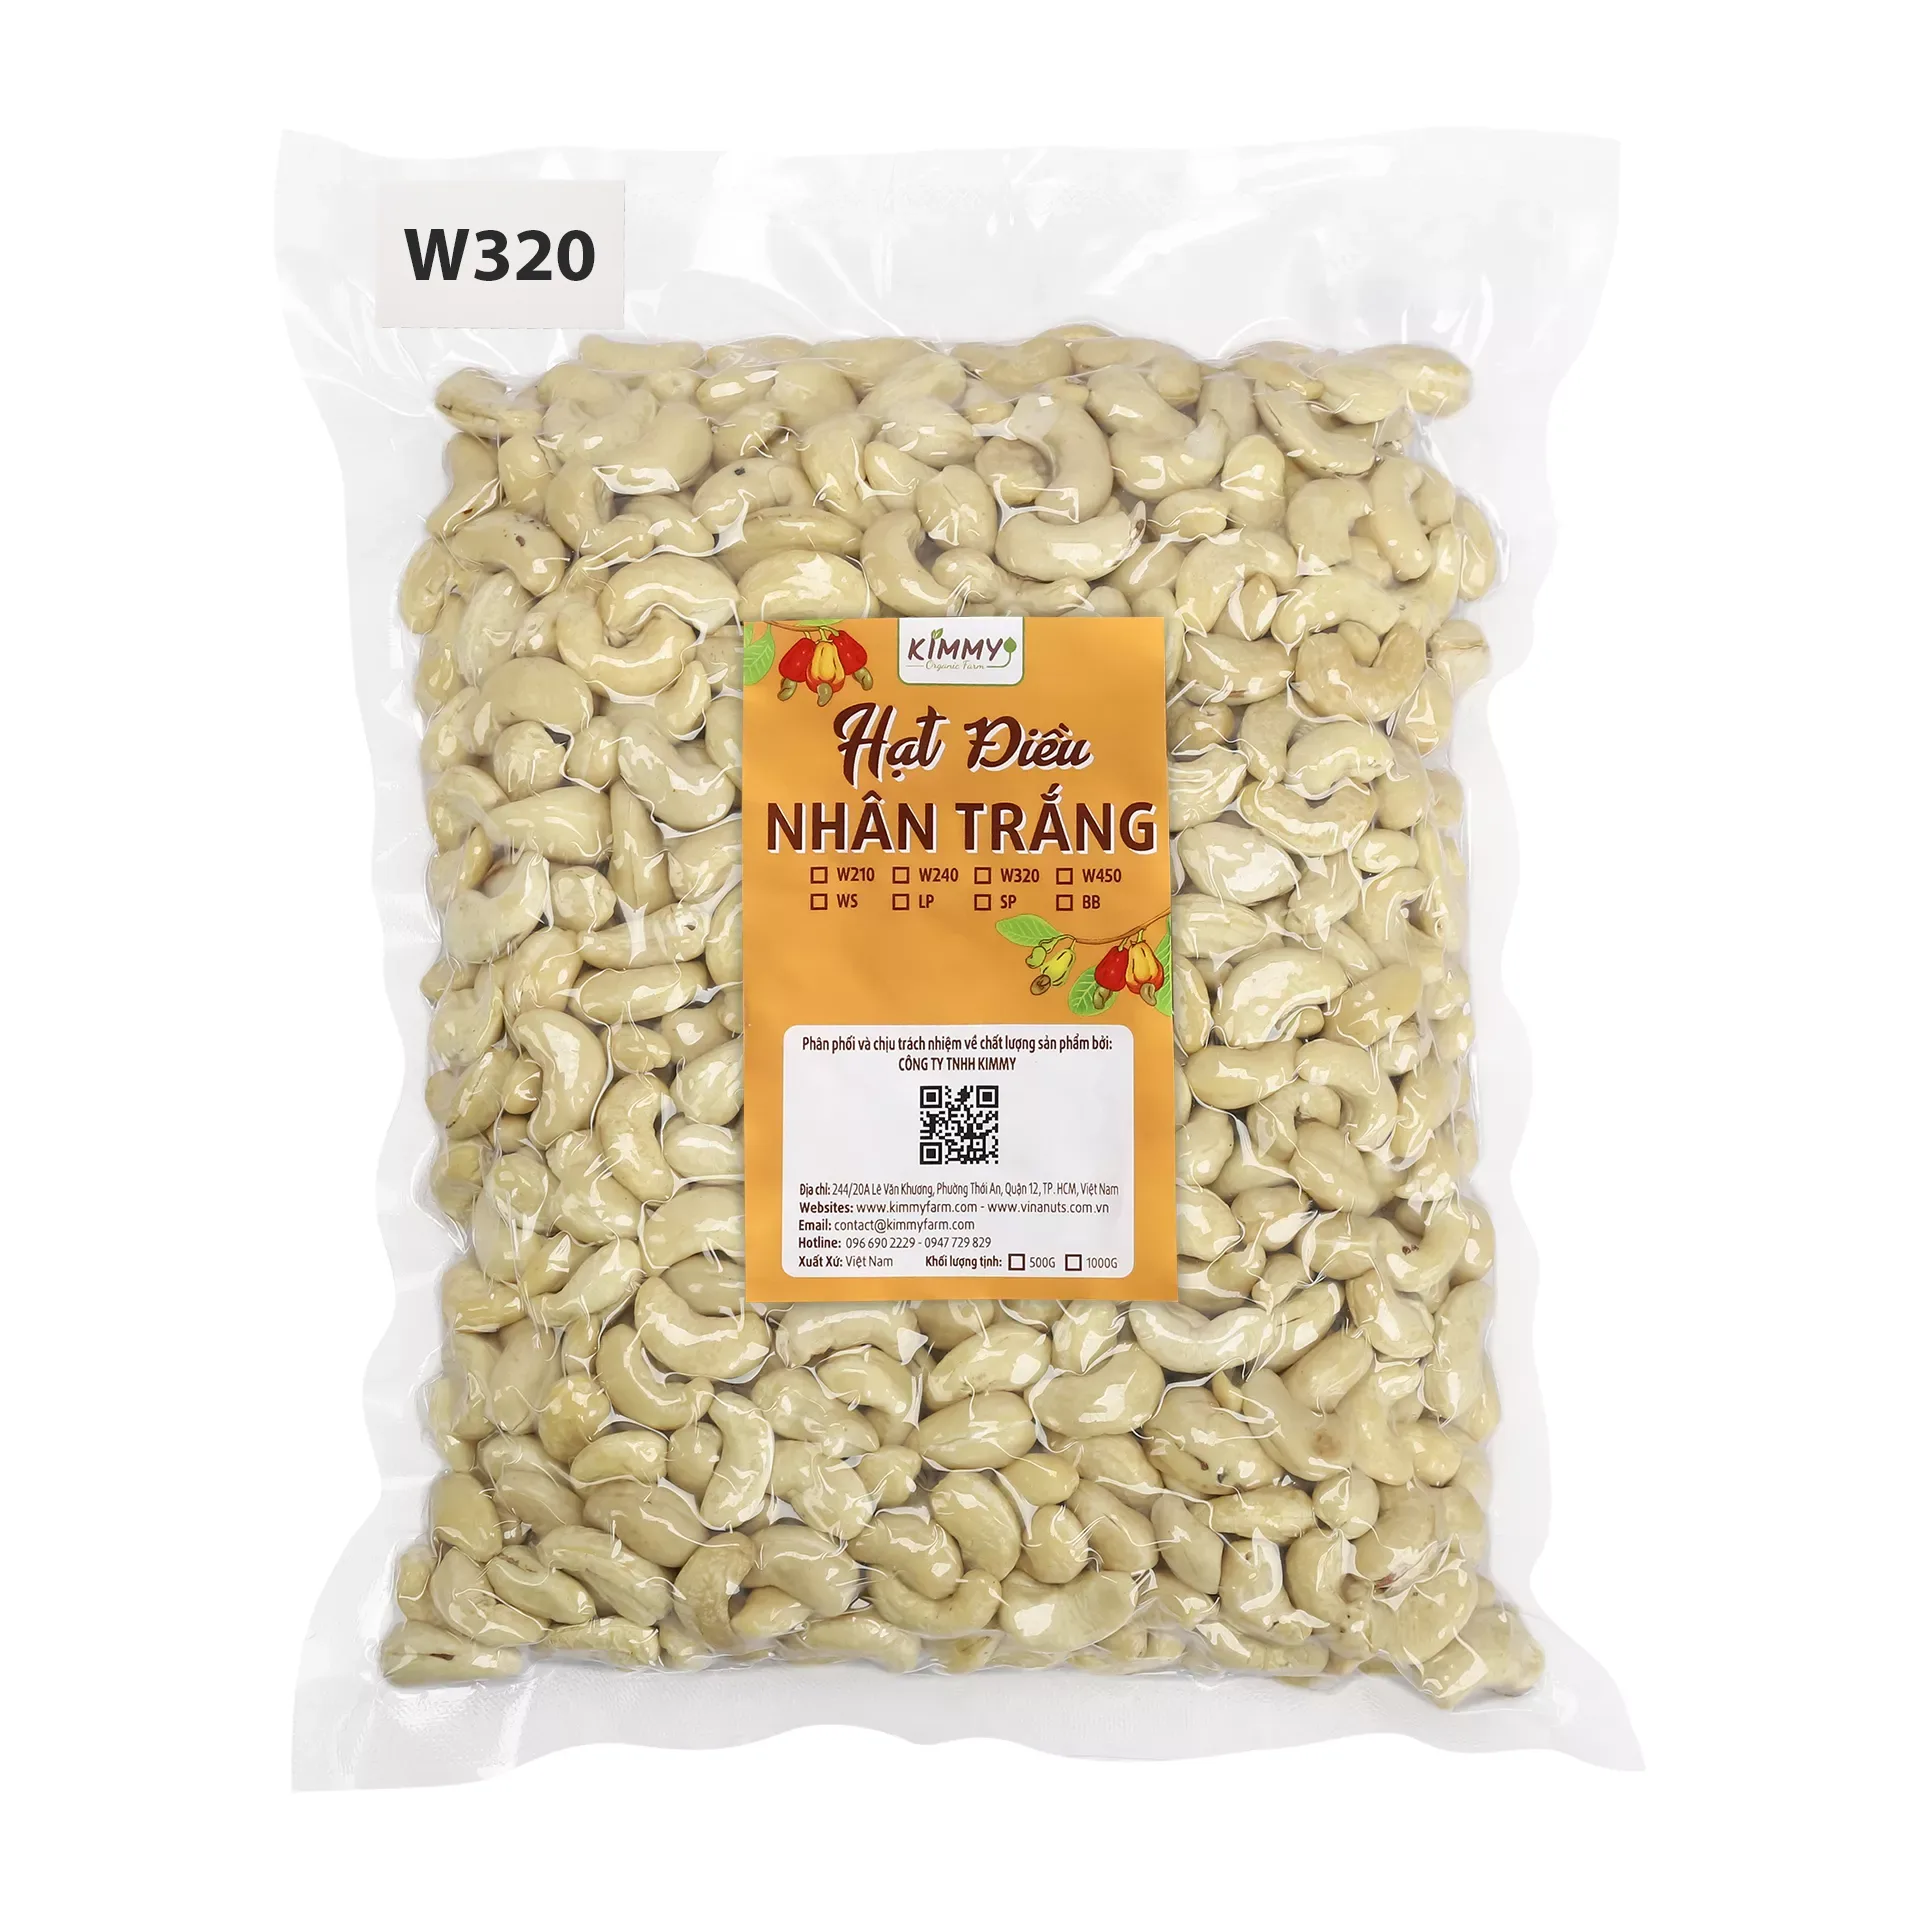 W320 Cashew Nut Kernels With Premium Quality - Packed 1KG in Vaccum Bag - Kimmy Farm Vietnam